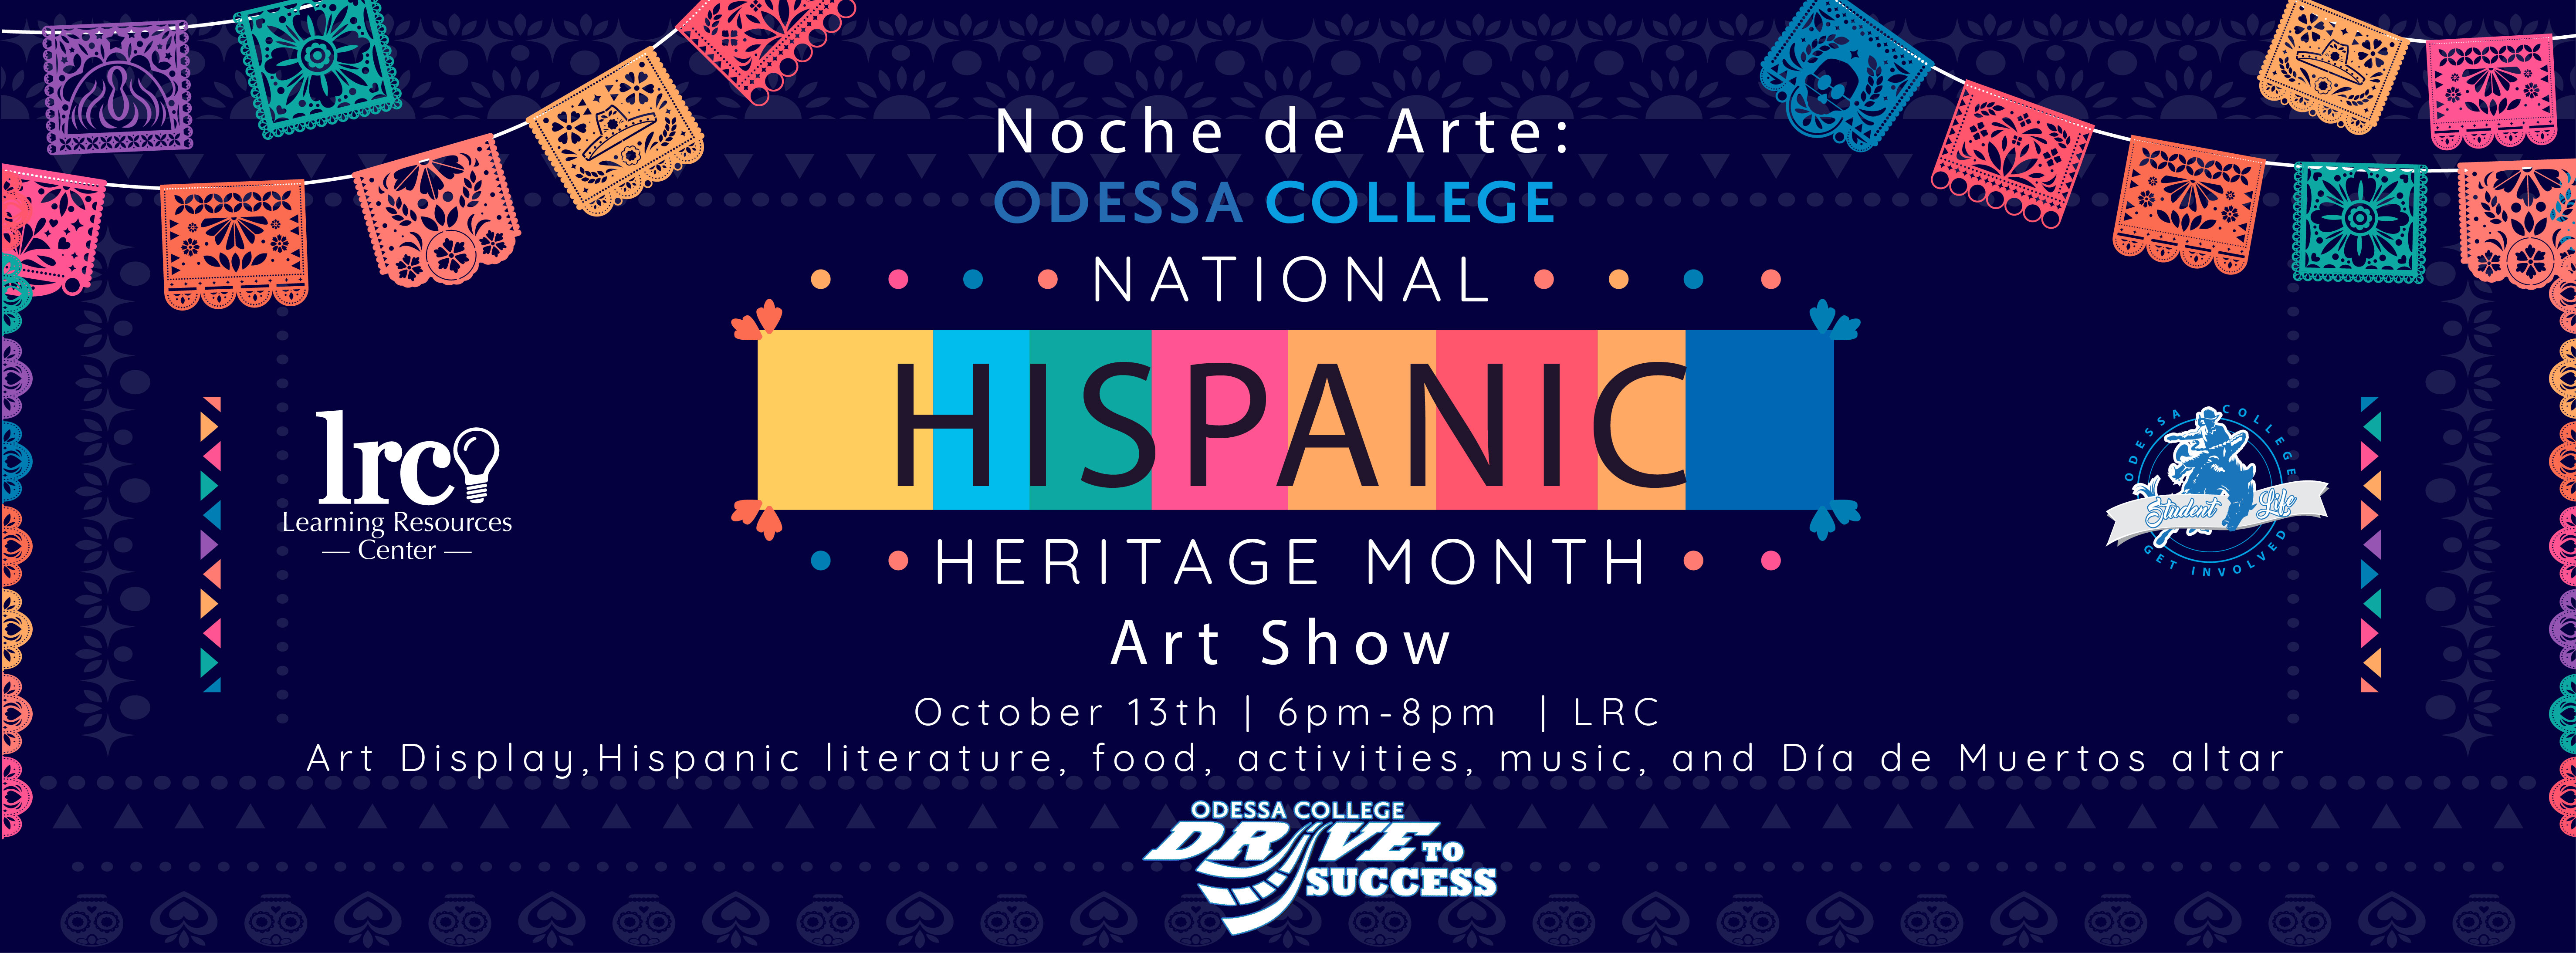 Hispanic Heritage Art Show